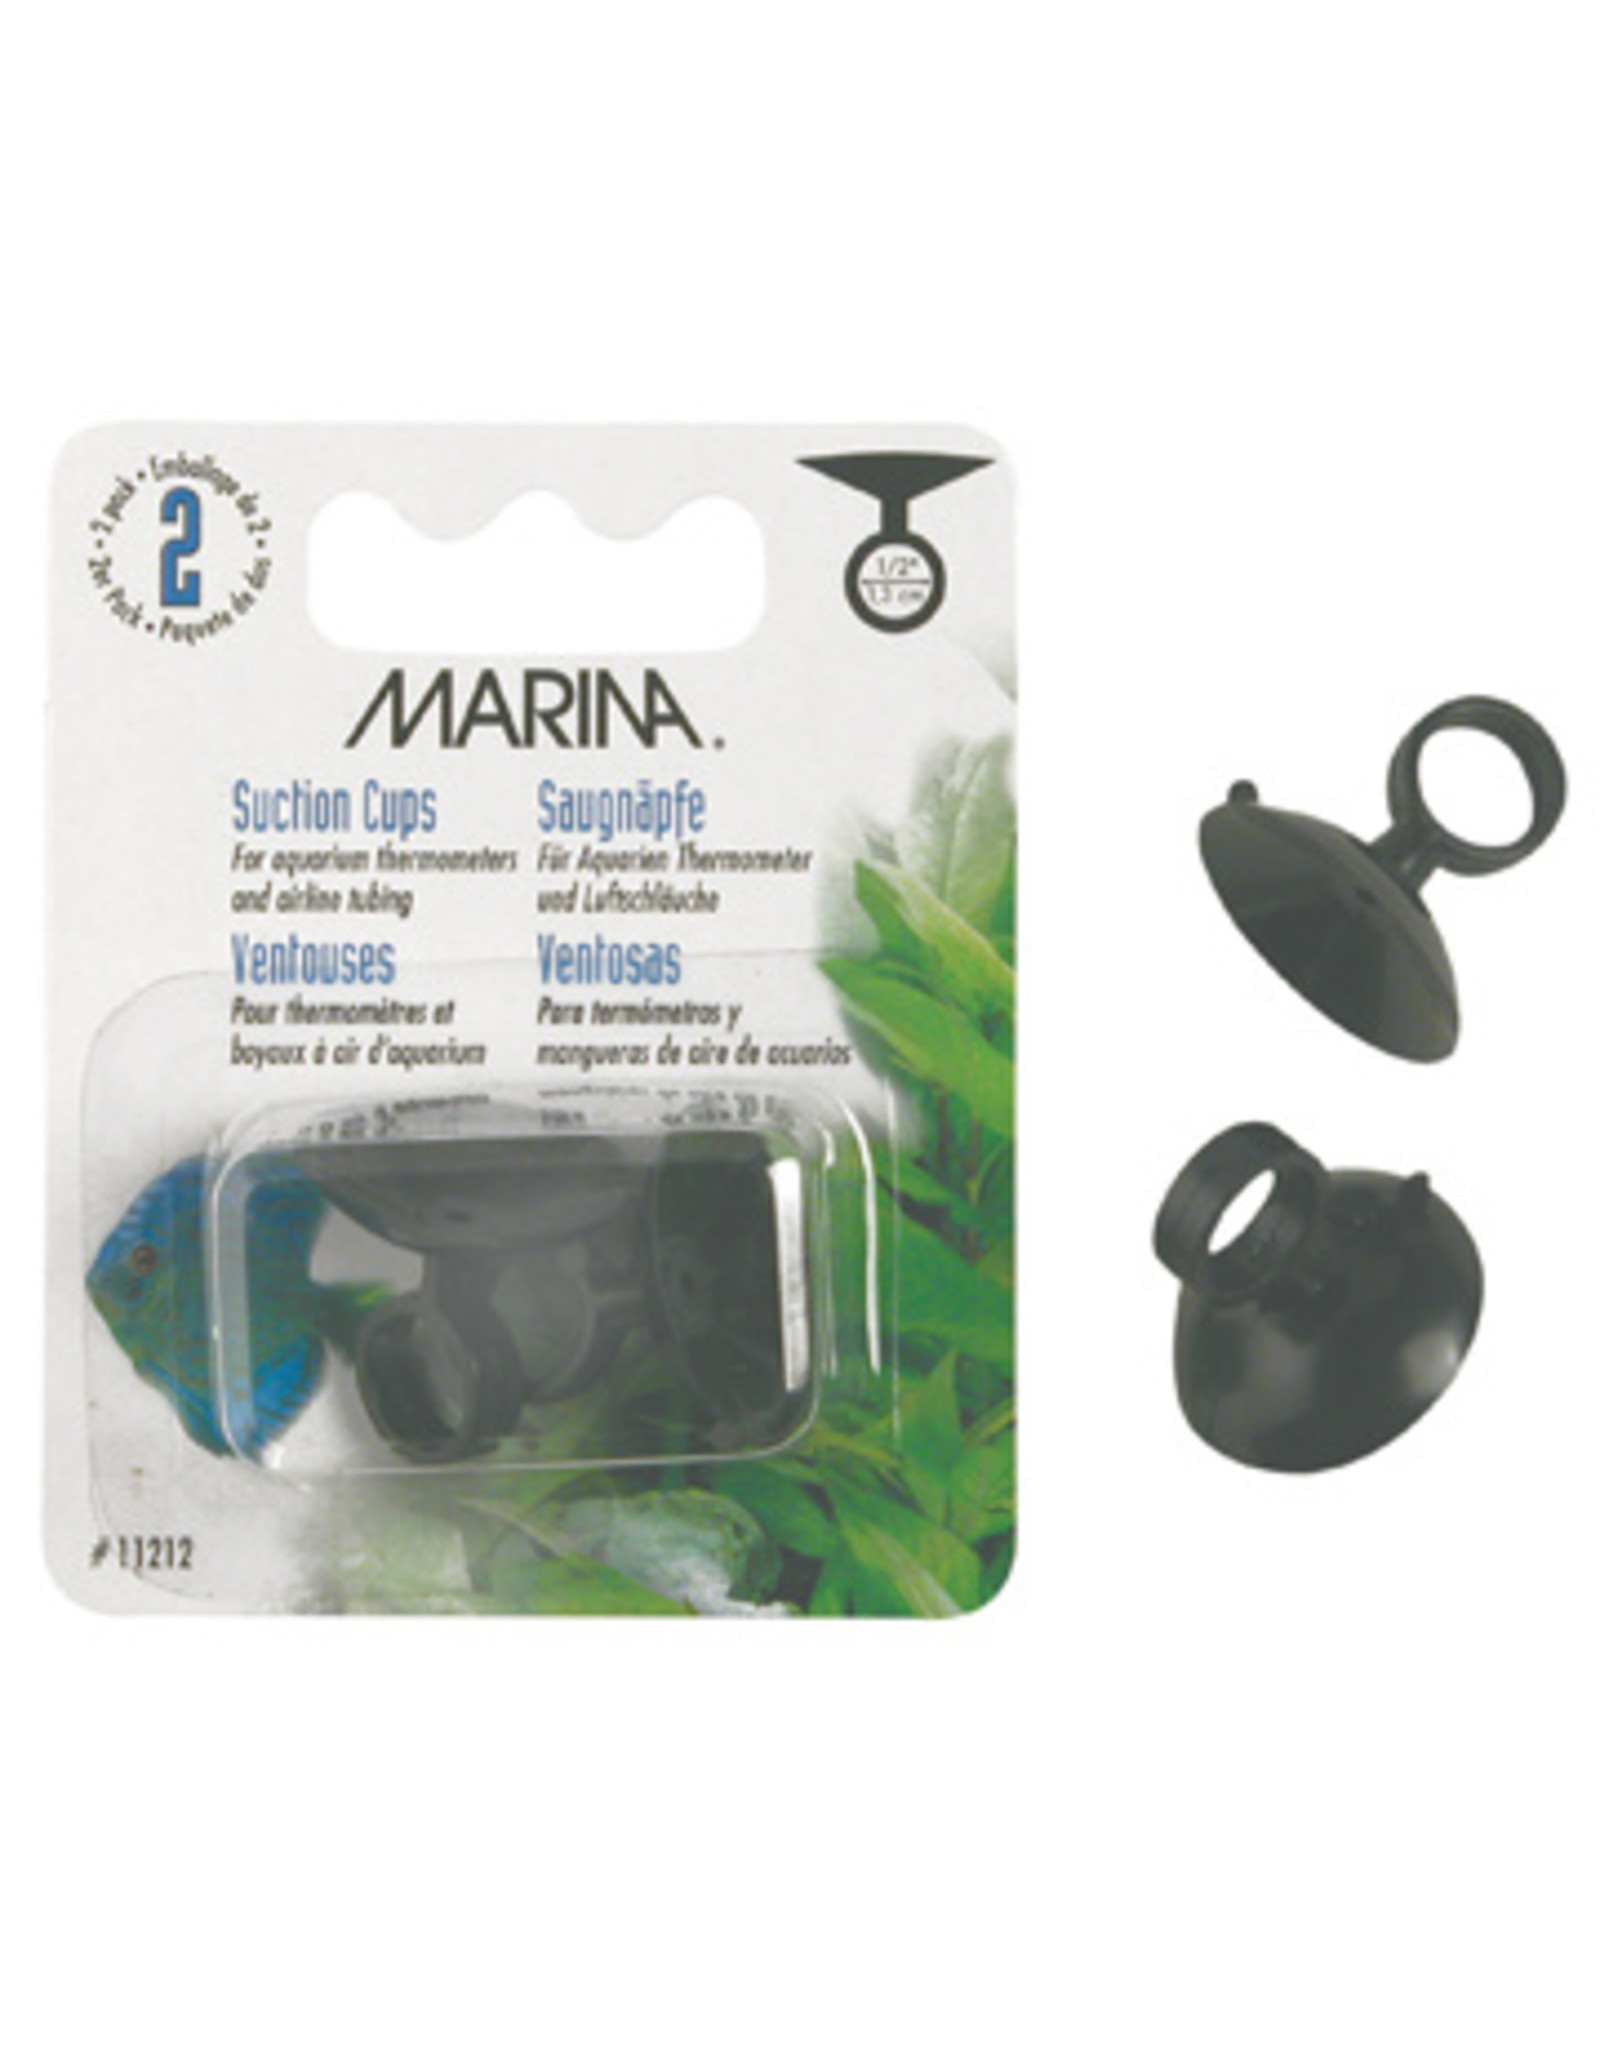 Marina MARINA Thermometer Suction Cups 1/2"